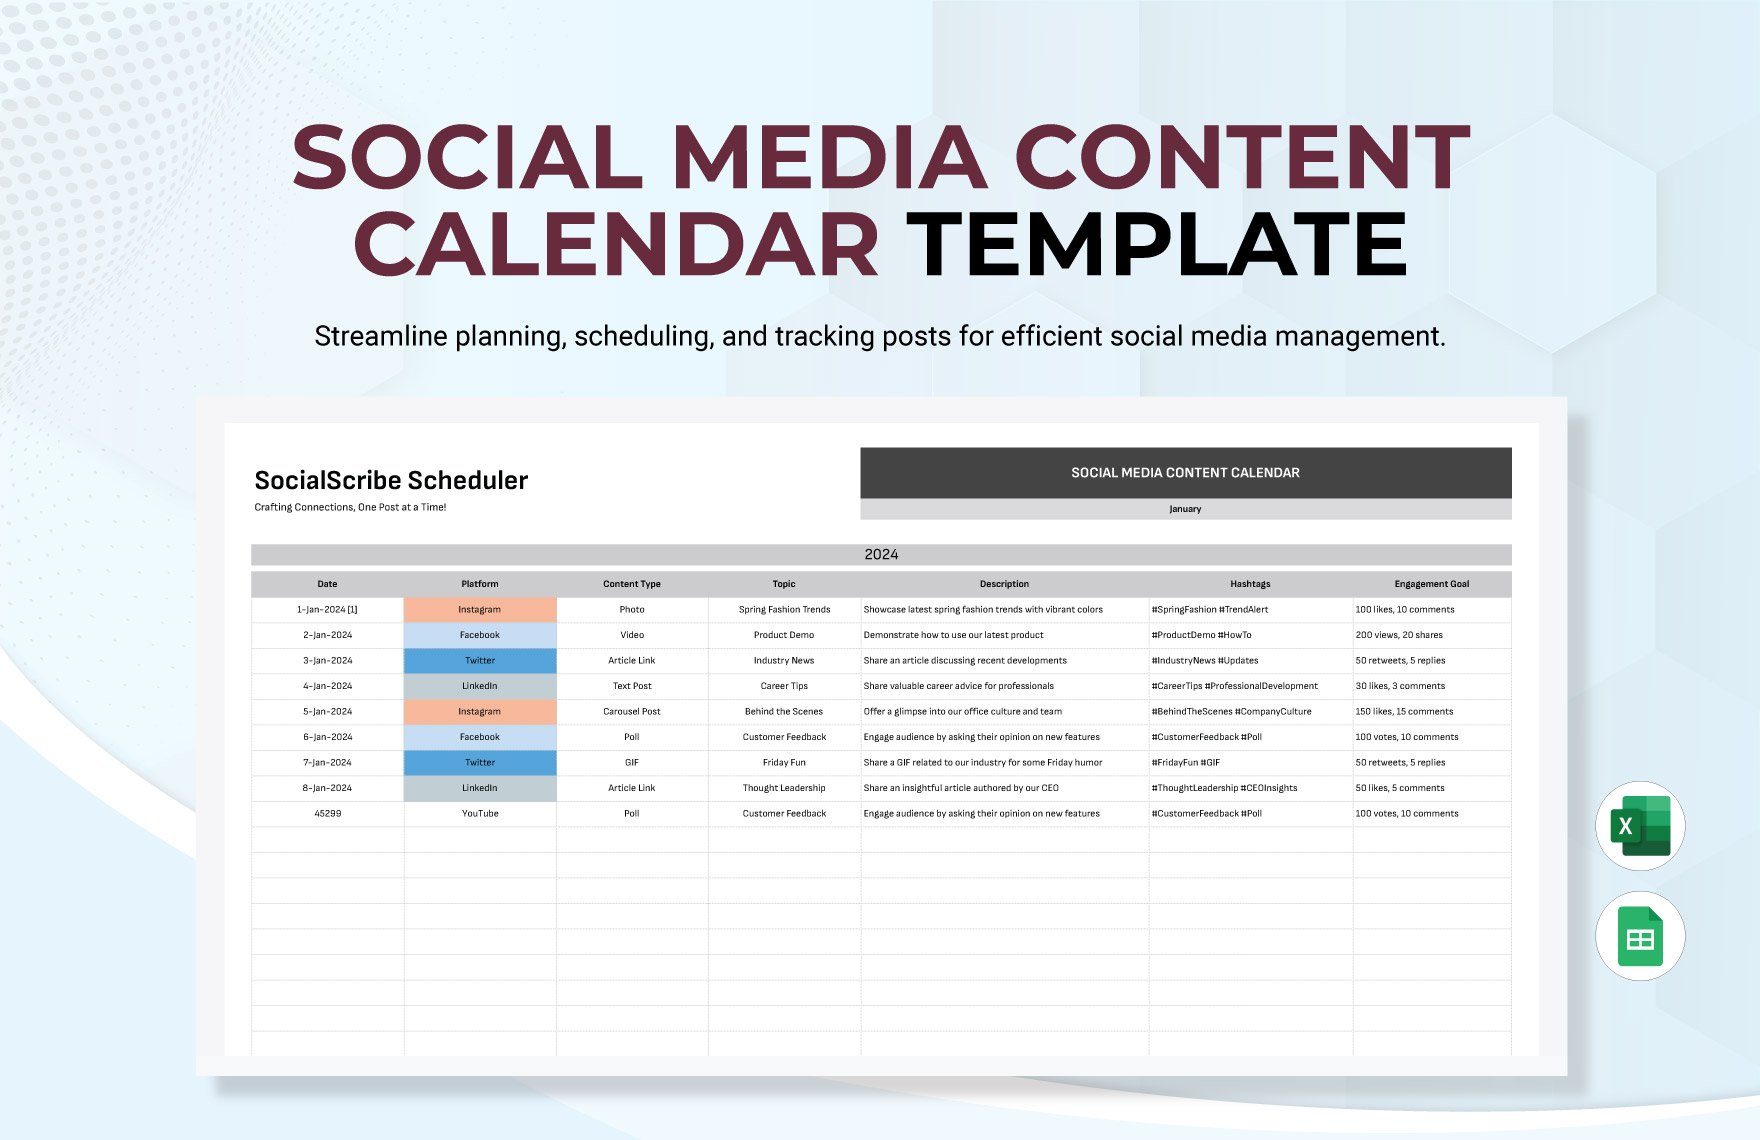 Social Media Content Calendar Template in Excel, Google Sheets